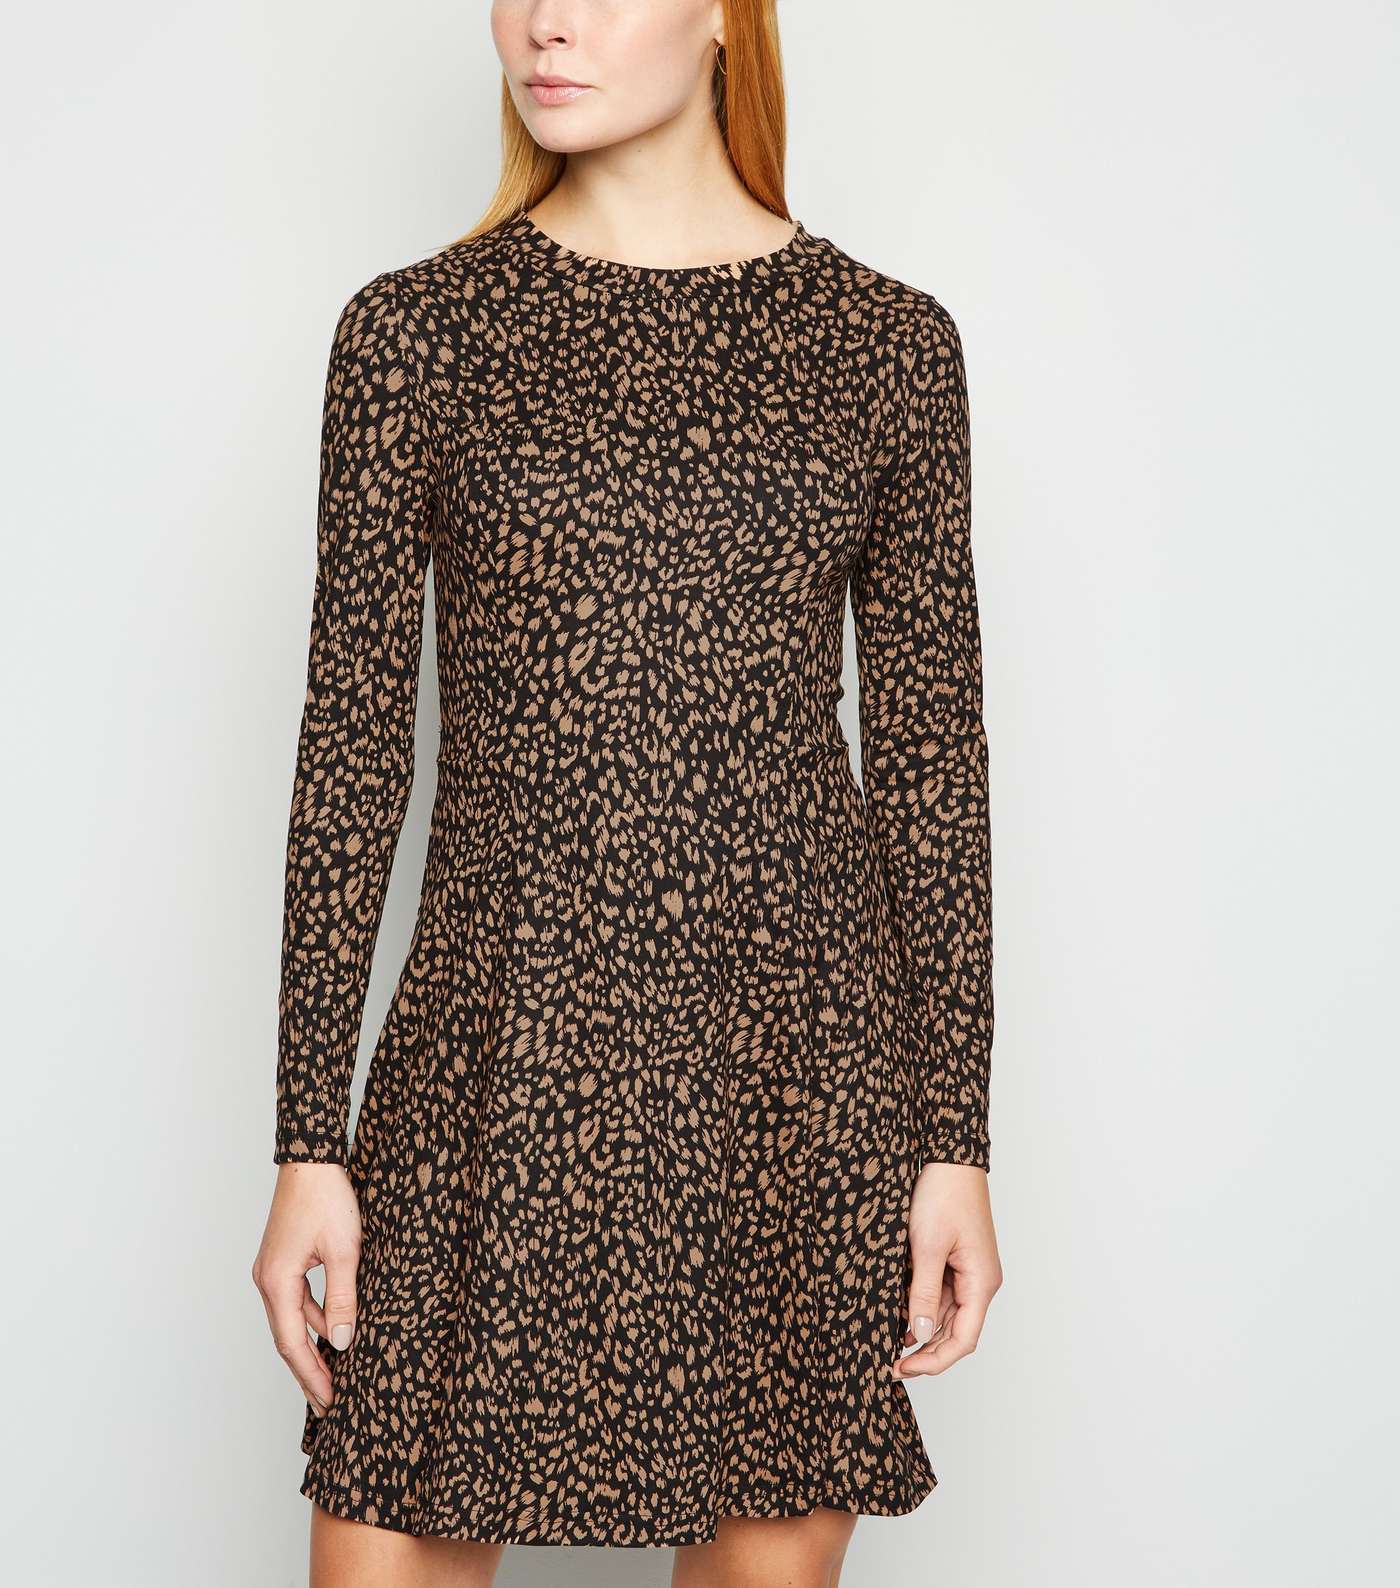 Black Leopard Print Long Sleeve Dress Image 2